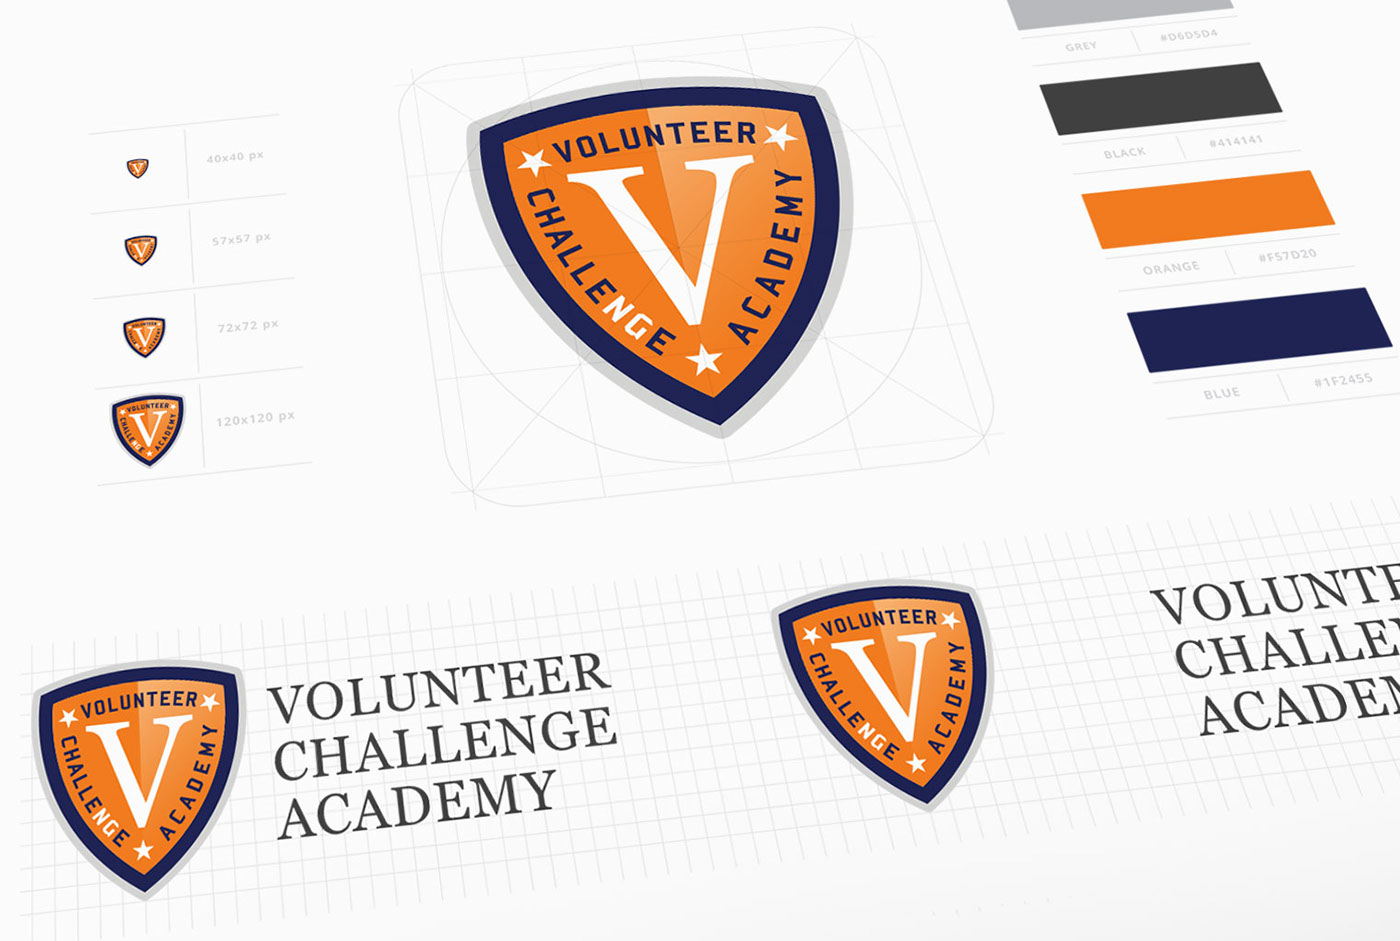 volunteer challenge National Guard army Military Education logo orange agca